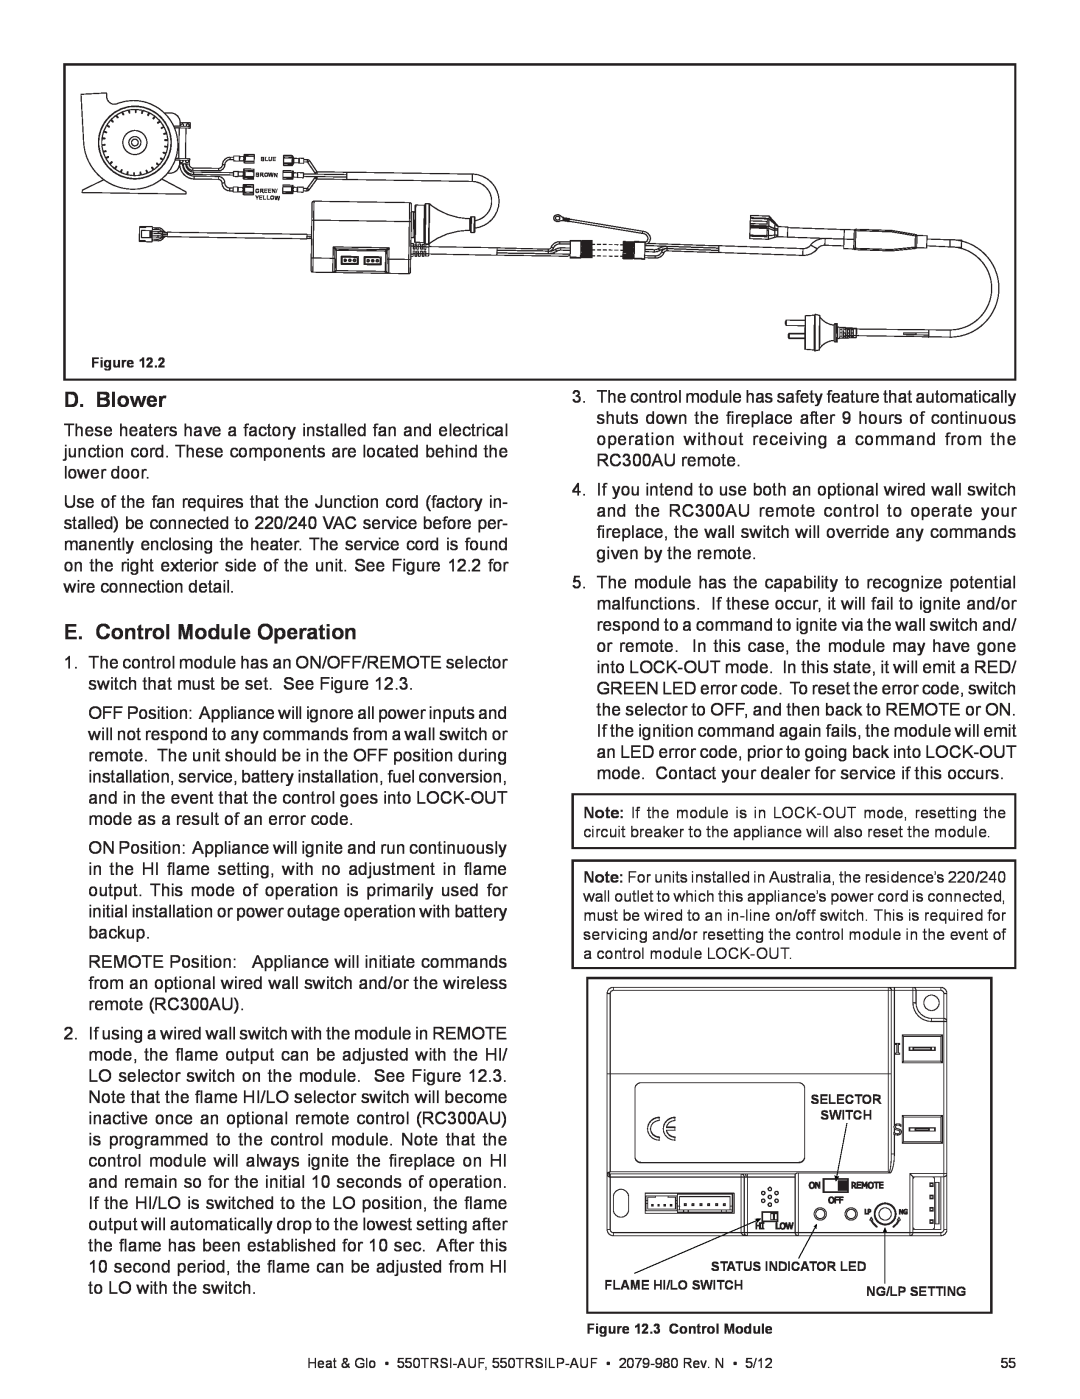 Heat & Glo LifeStyle 550TRSI-AUF owner manual D. Blower, E. Control Module Operation, 3 Control Module 